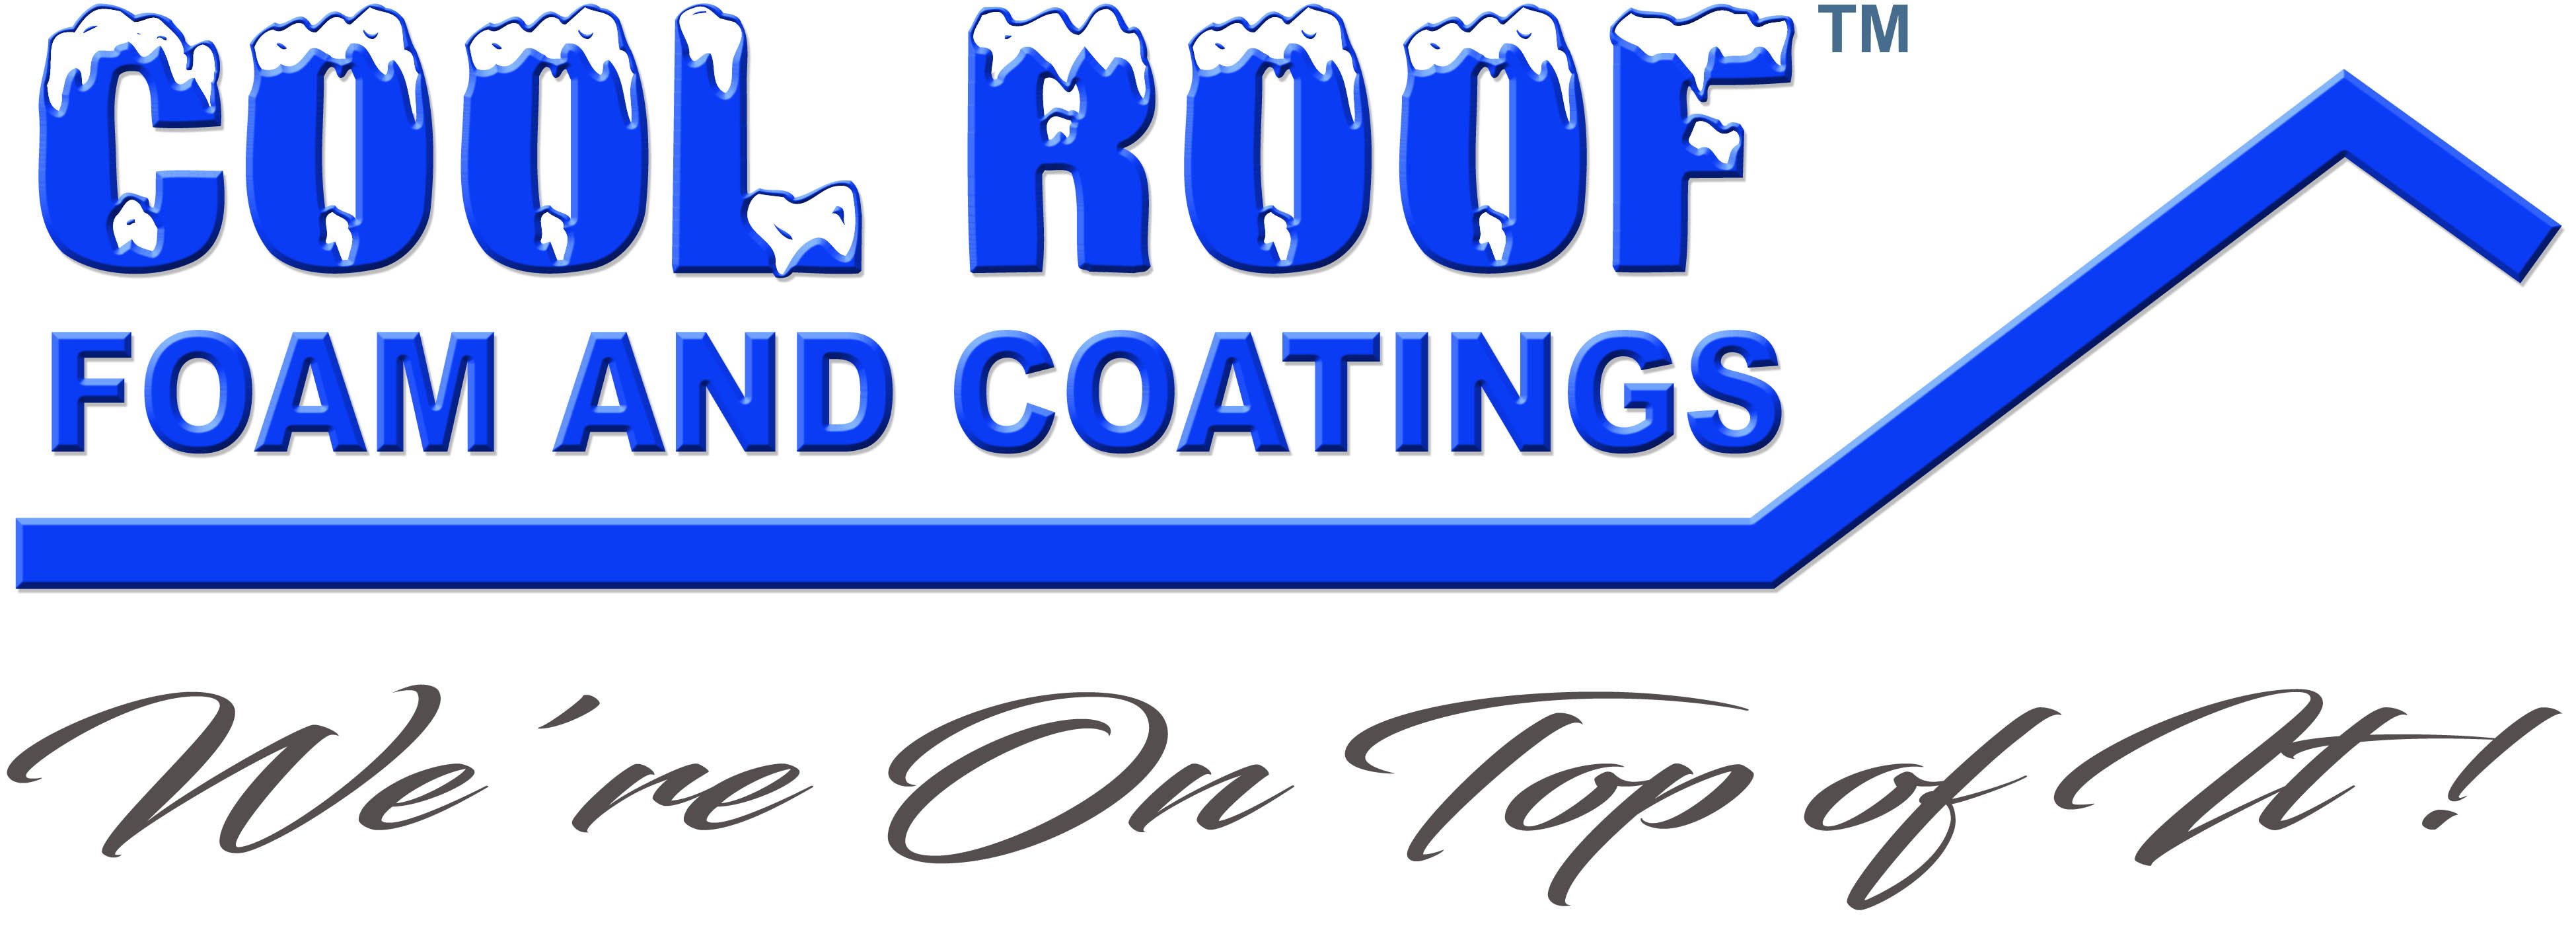 Golden Rule Enterprises Inc. DBA Cool Roof Foam and Coatings Logo